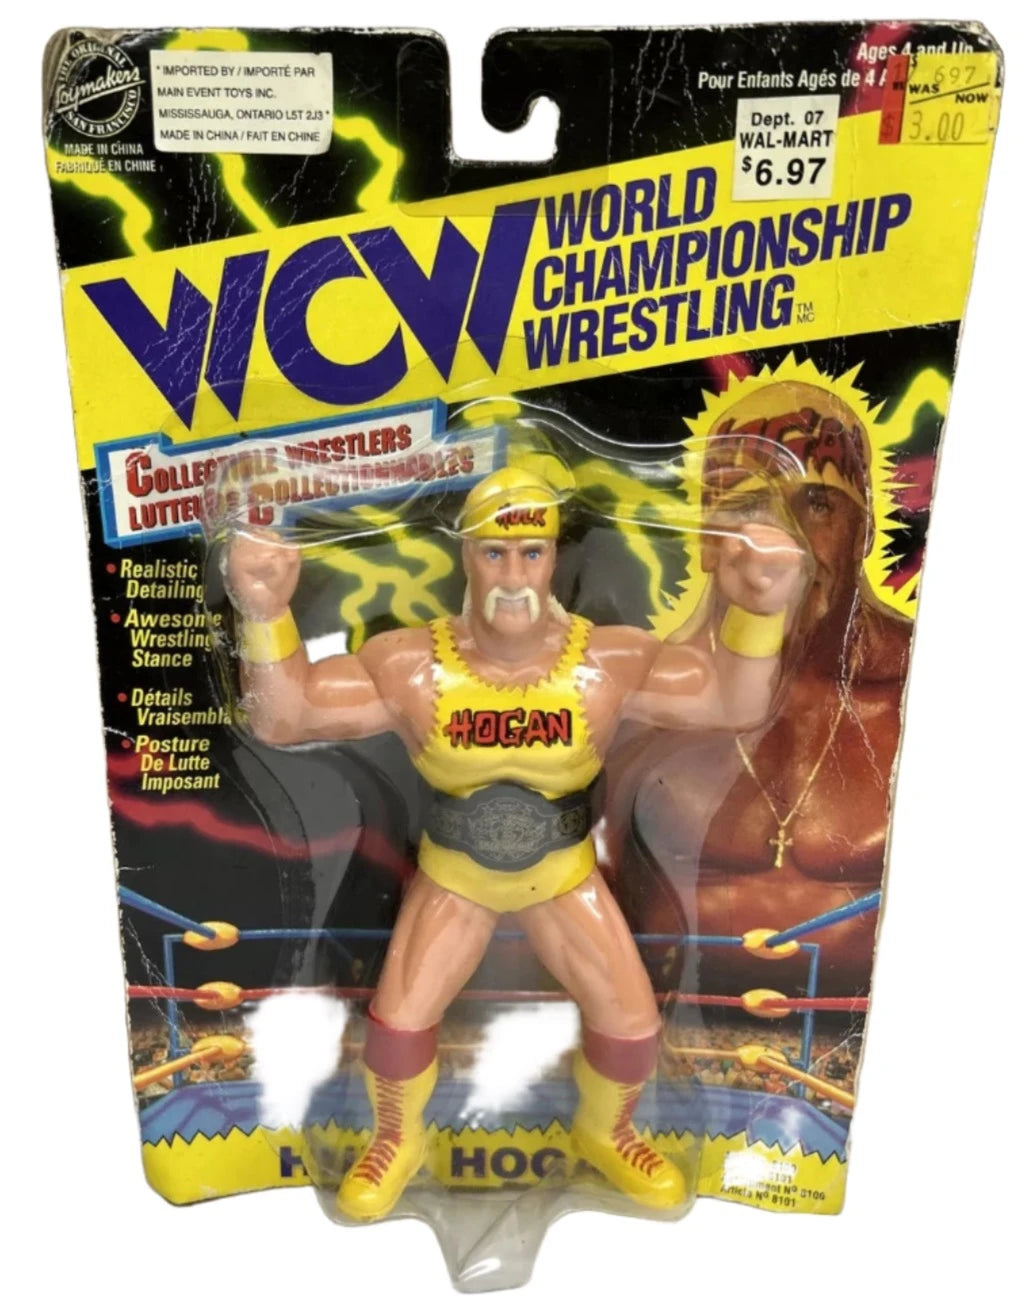 1995 WCW OSFTM Collectible Wrestlers [LJN Style] Series 1 Hulk Hogan